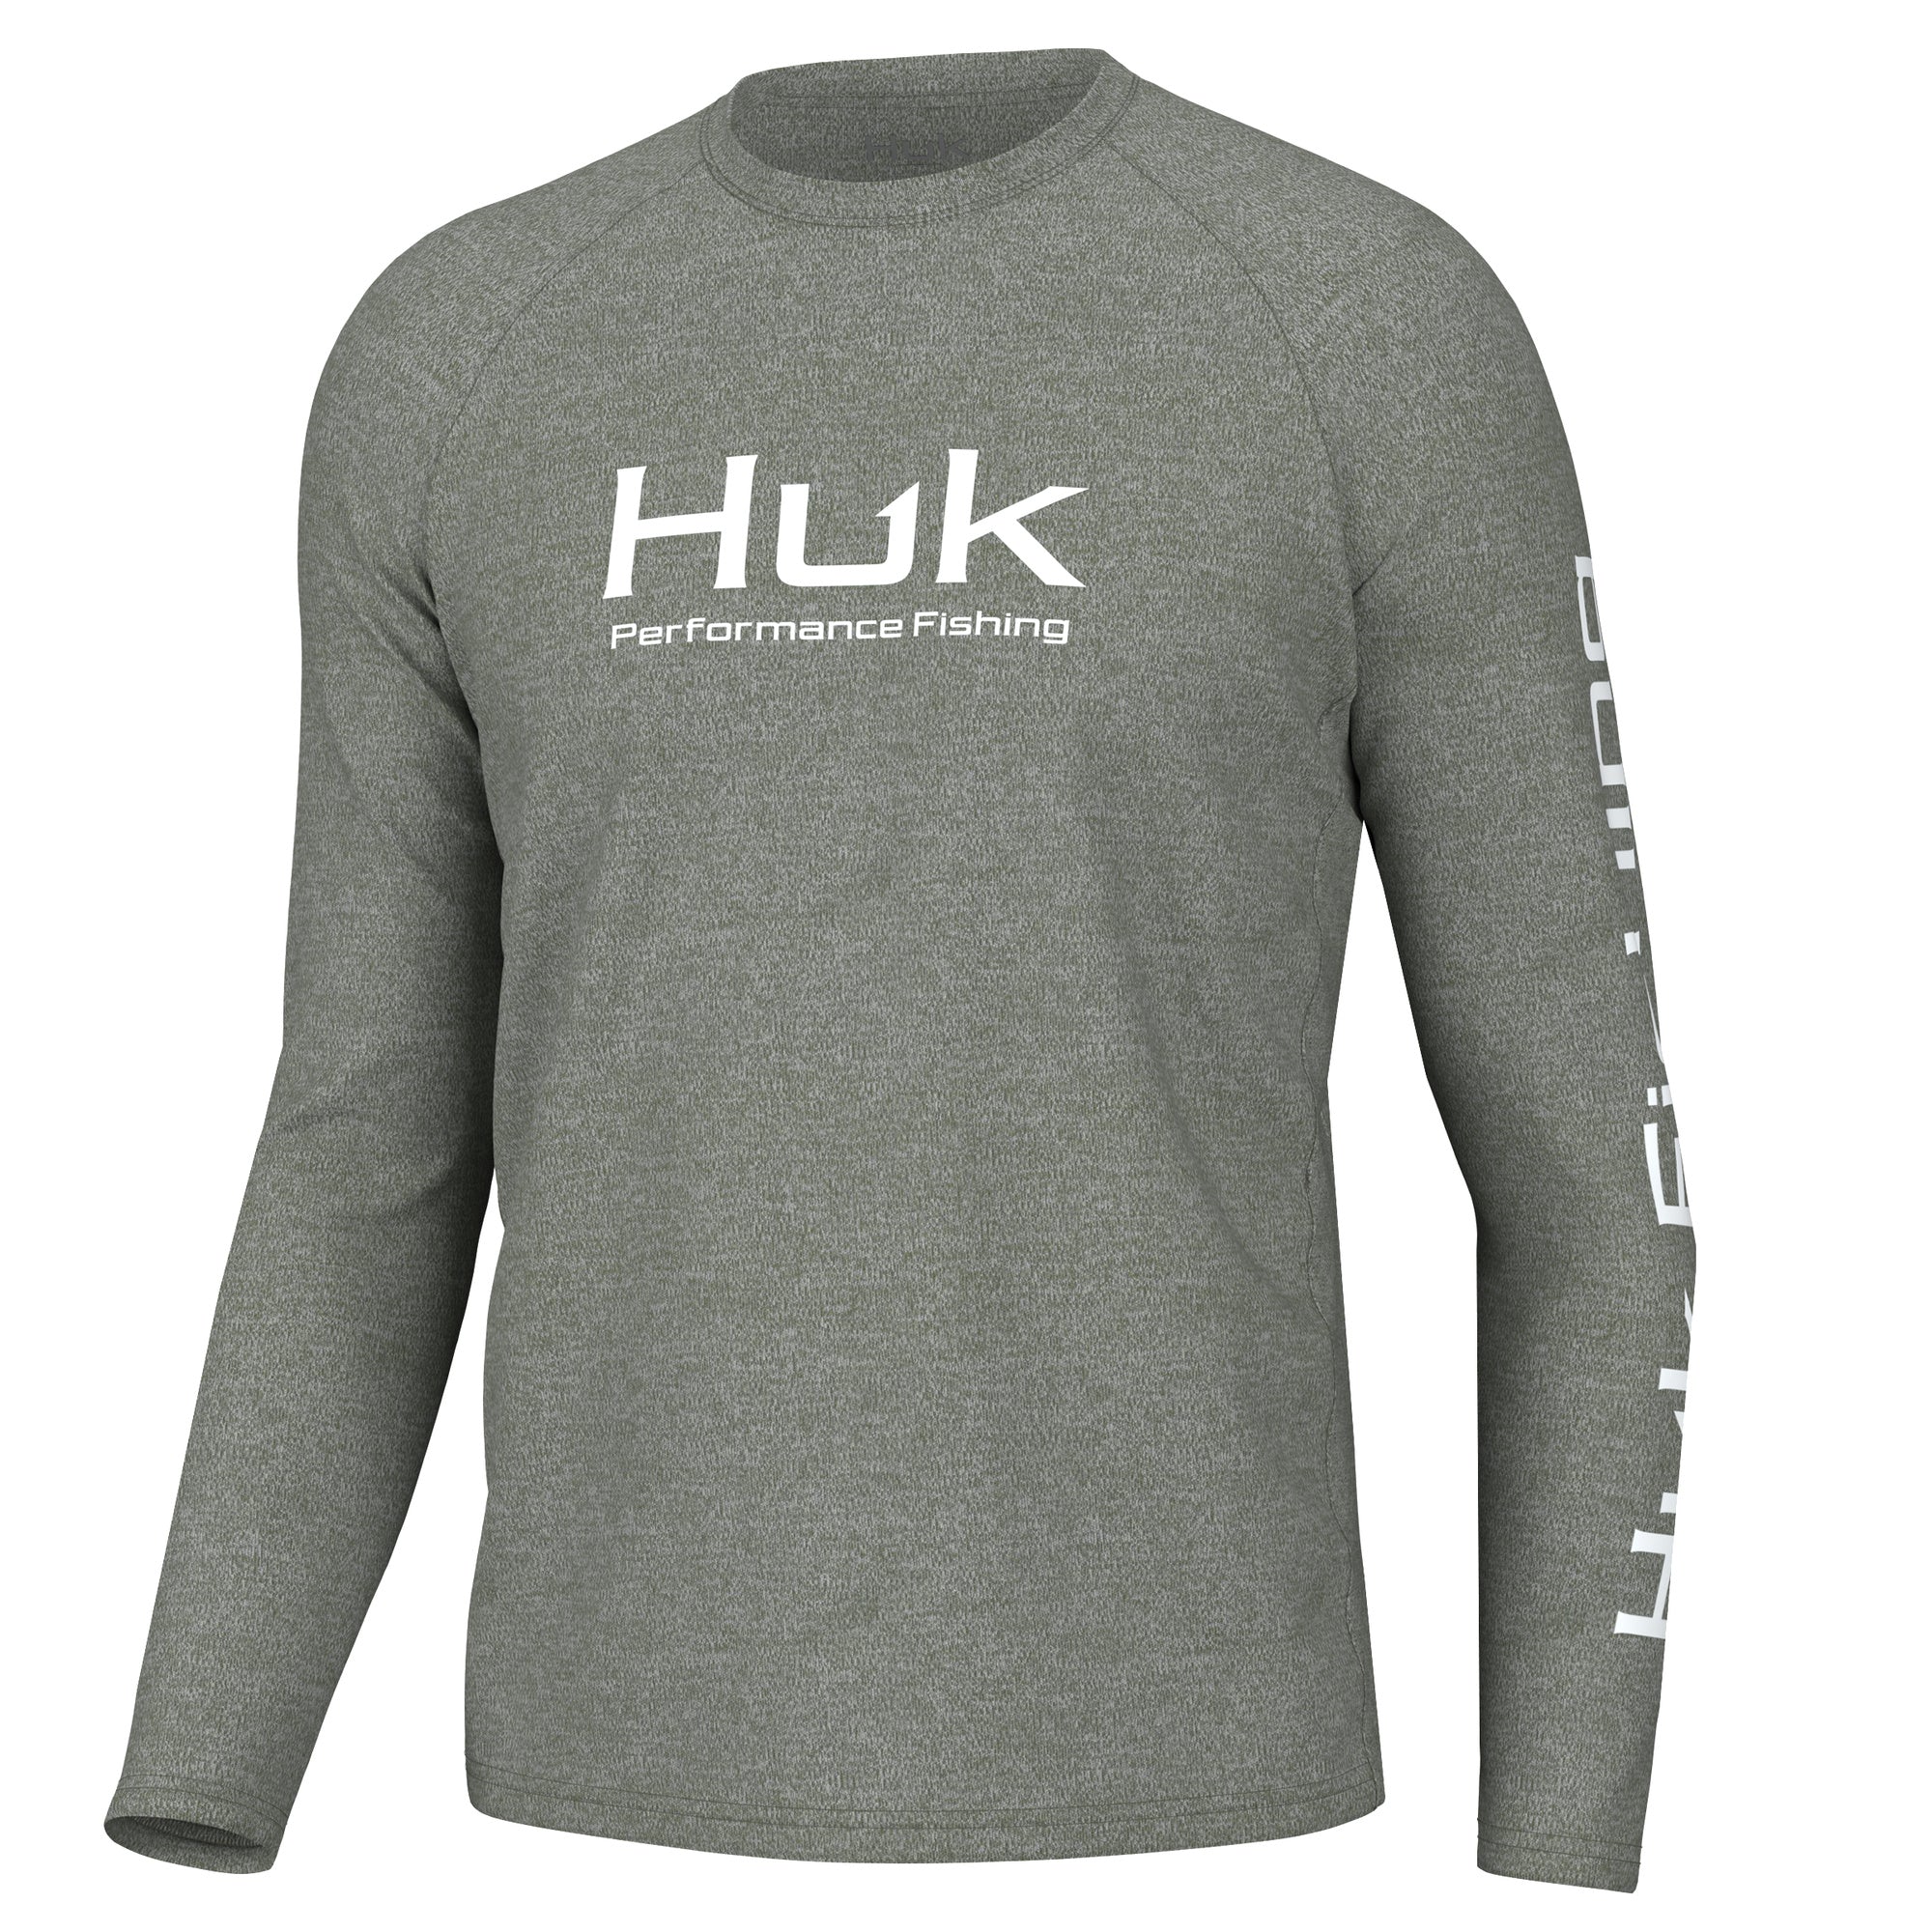 Huk Pursuit Vented Fishing Shirt for Men - White - XL